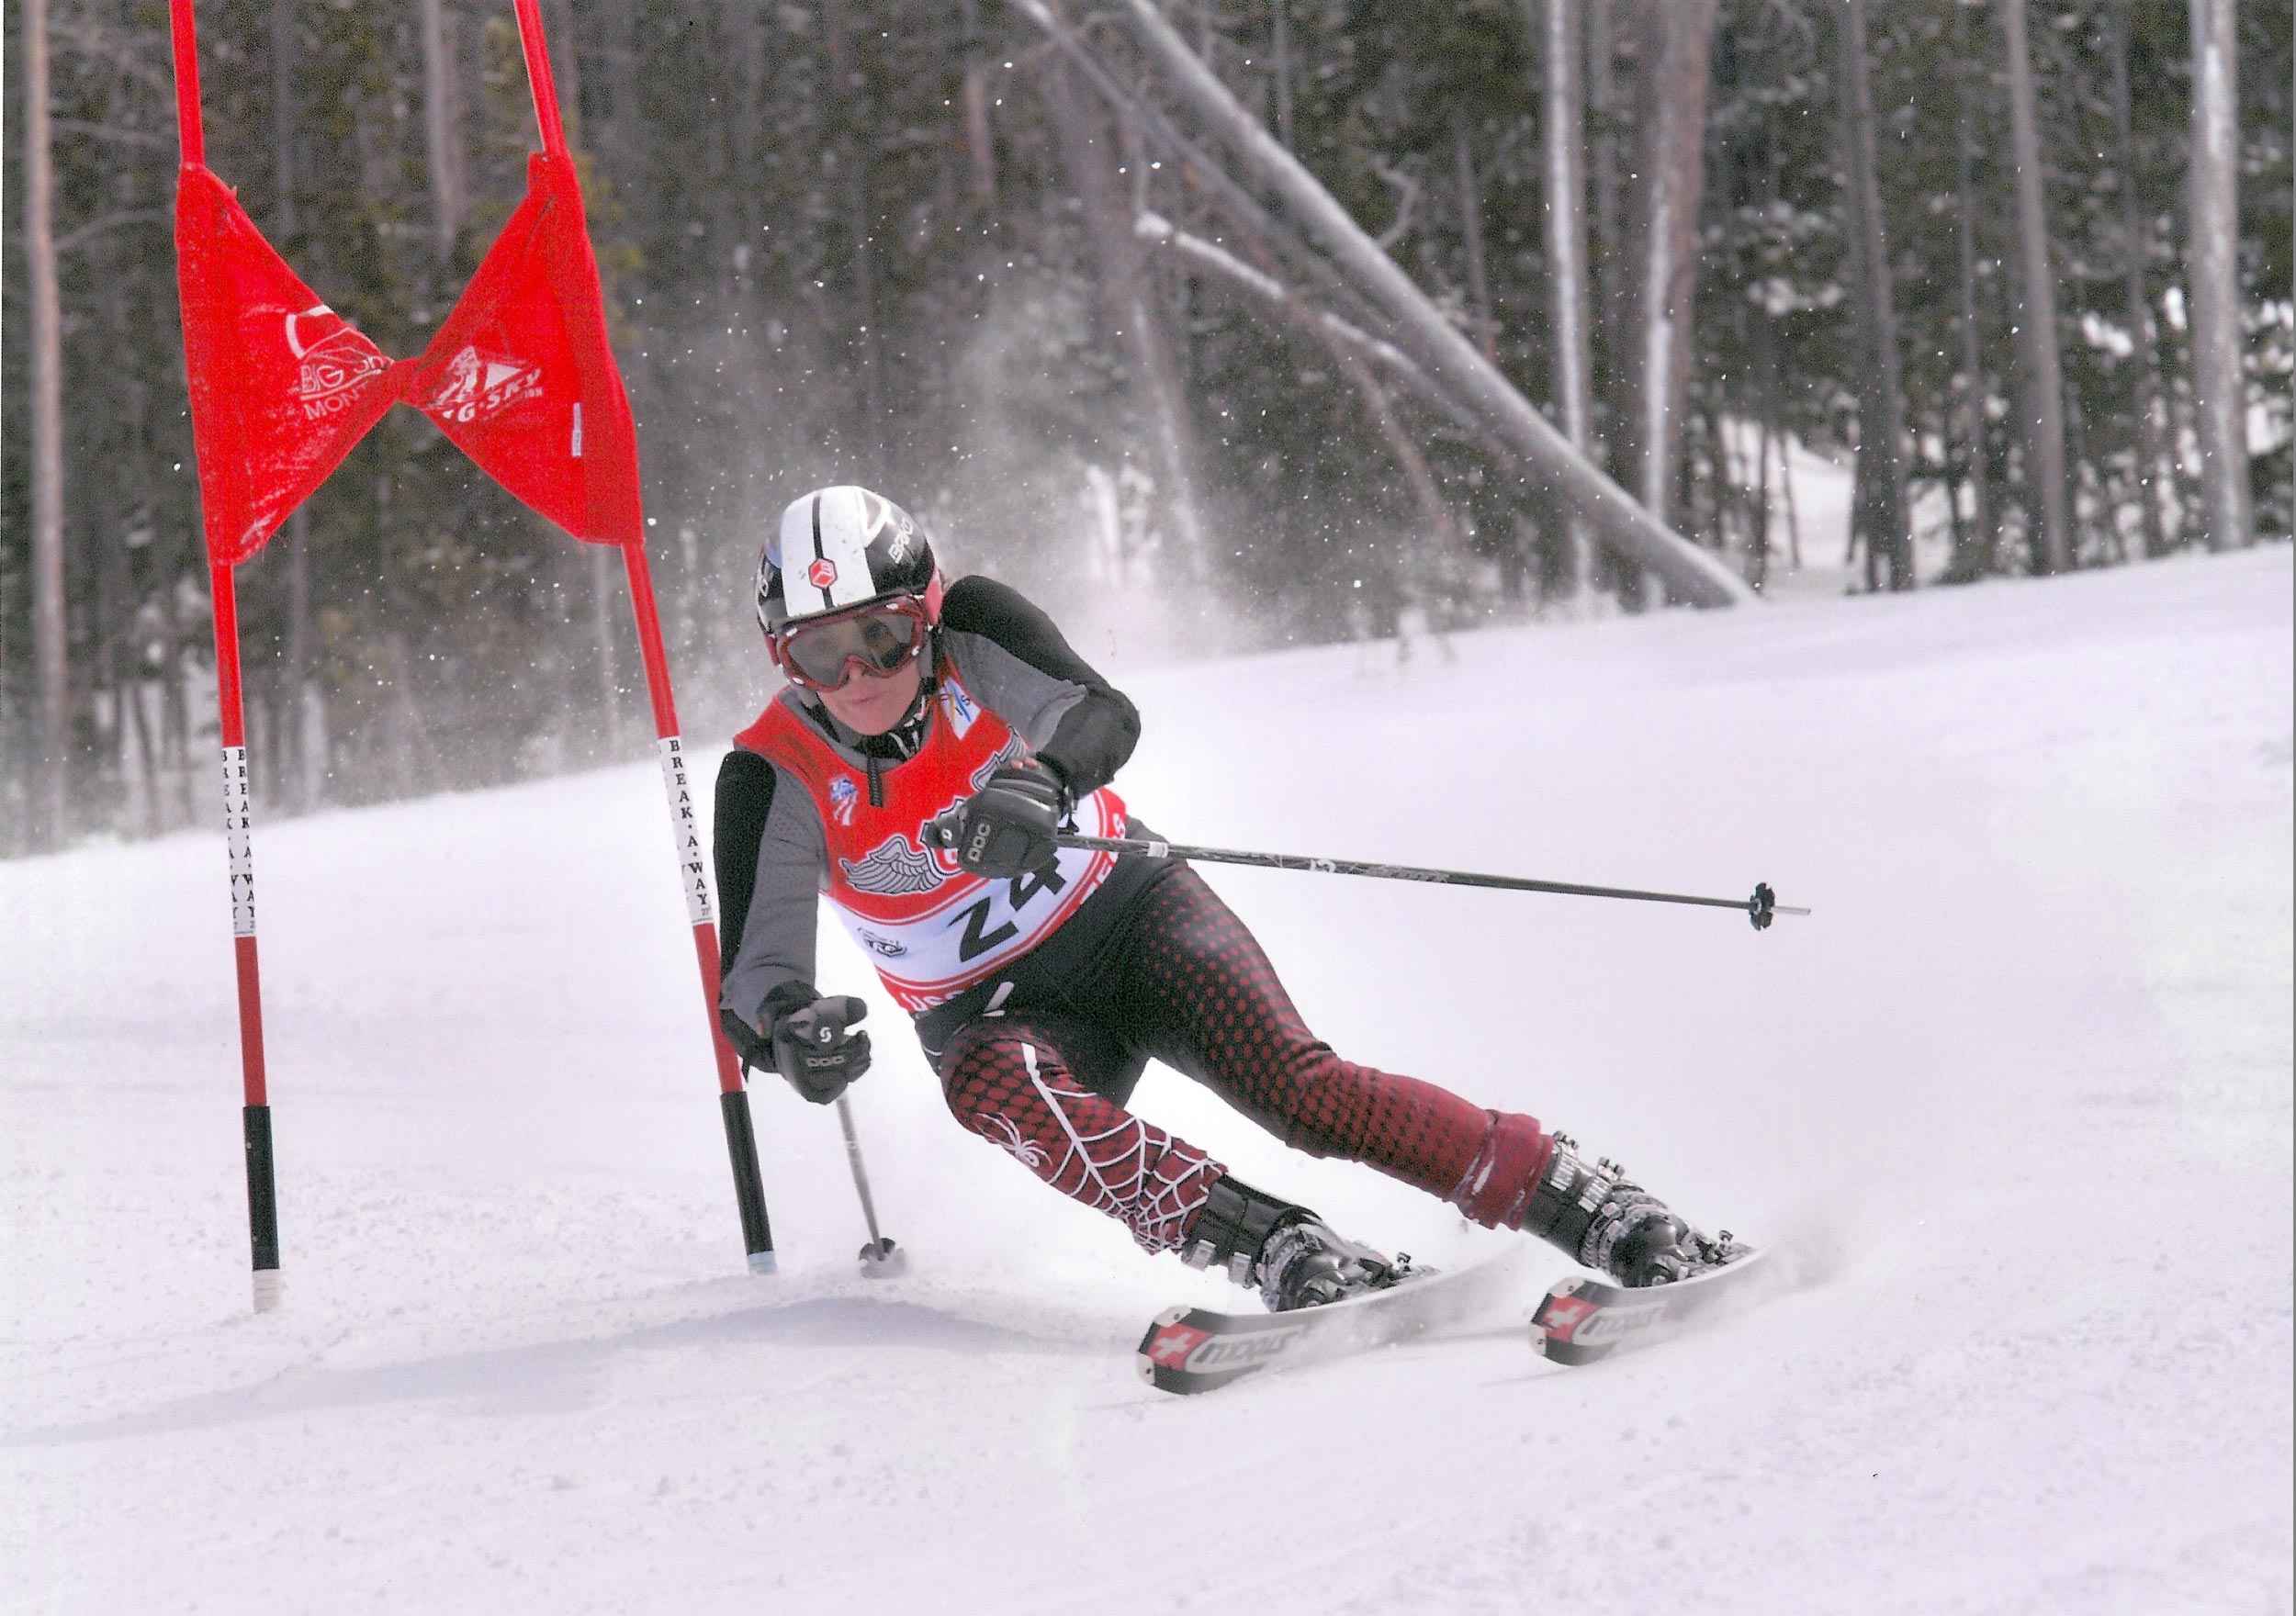 ALanzel_Ski-racing_2012-US-masters-nationals